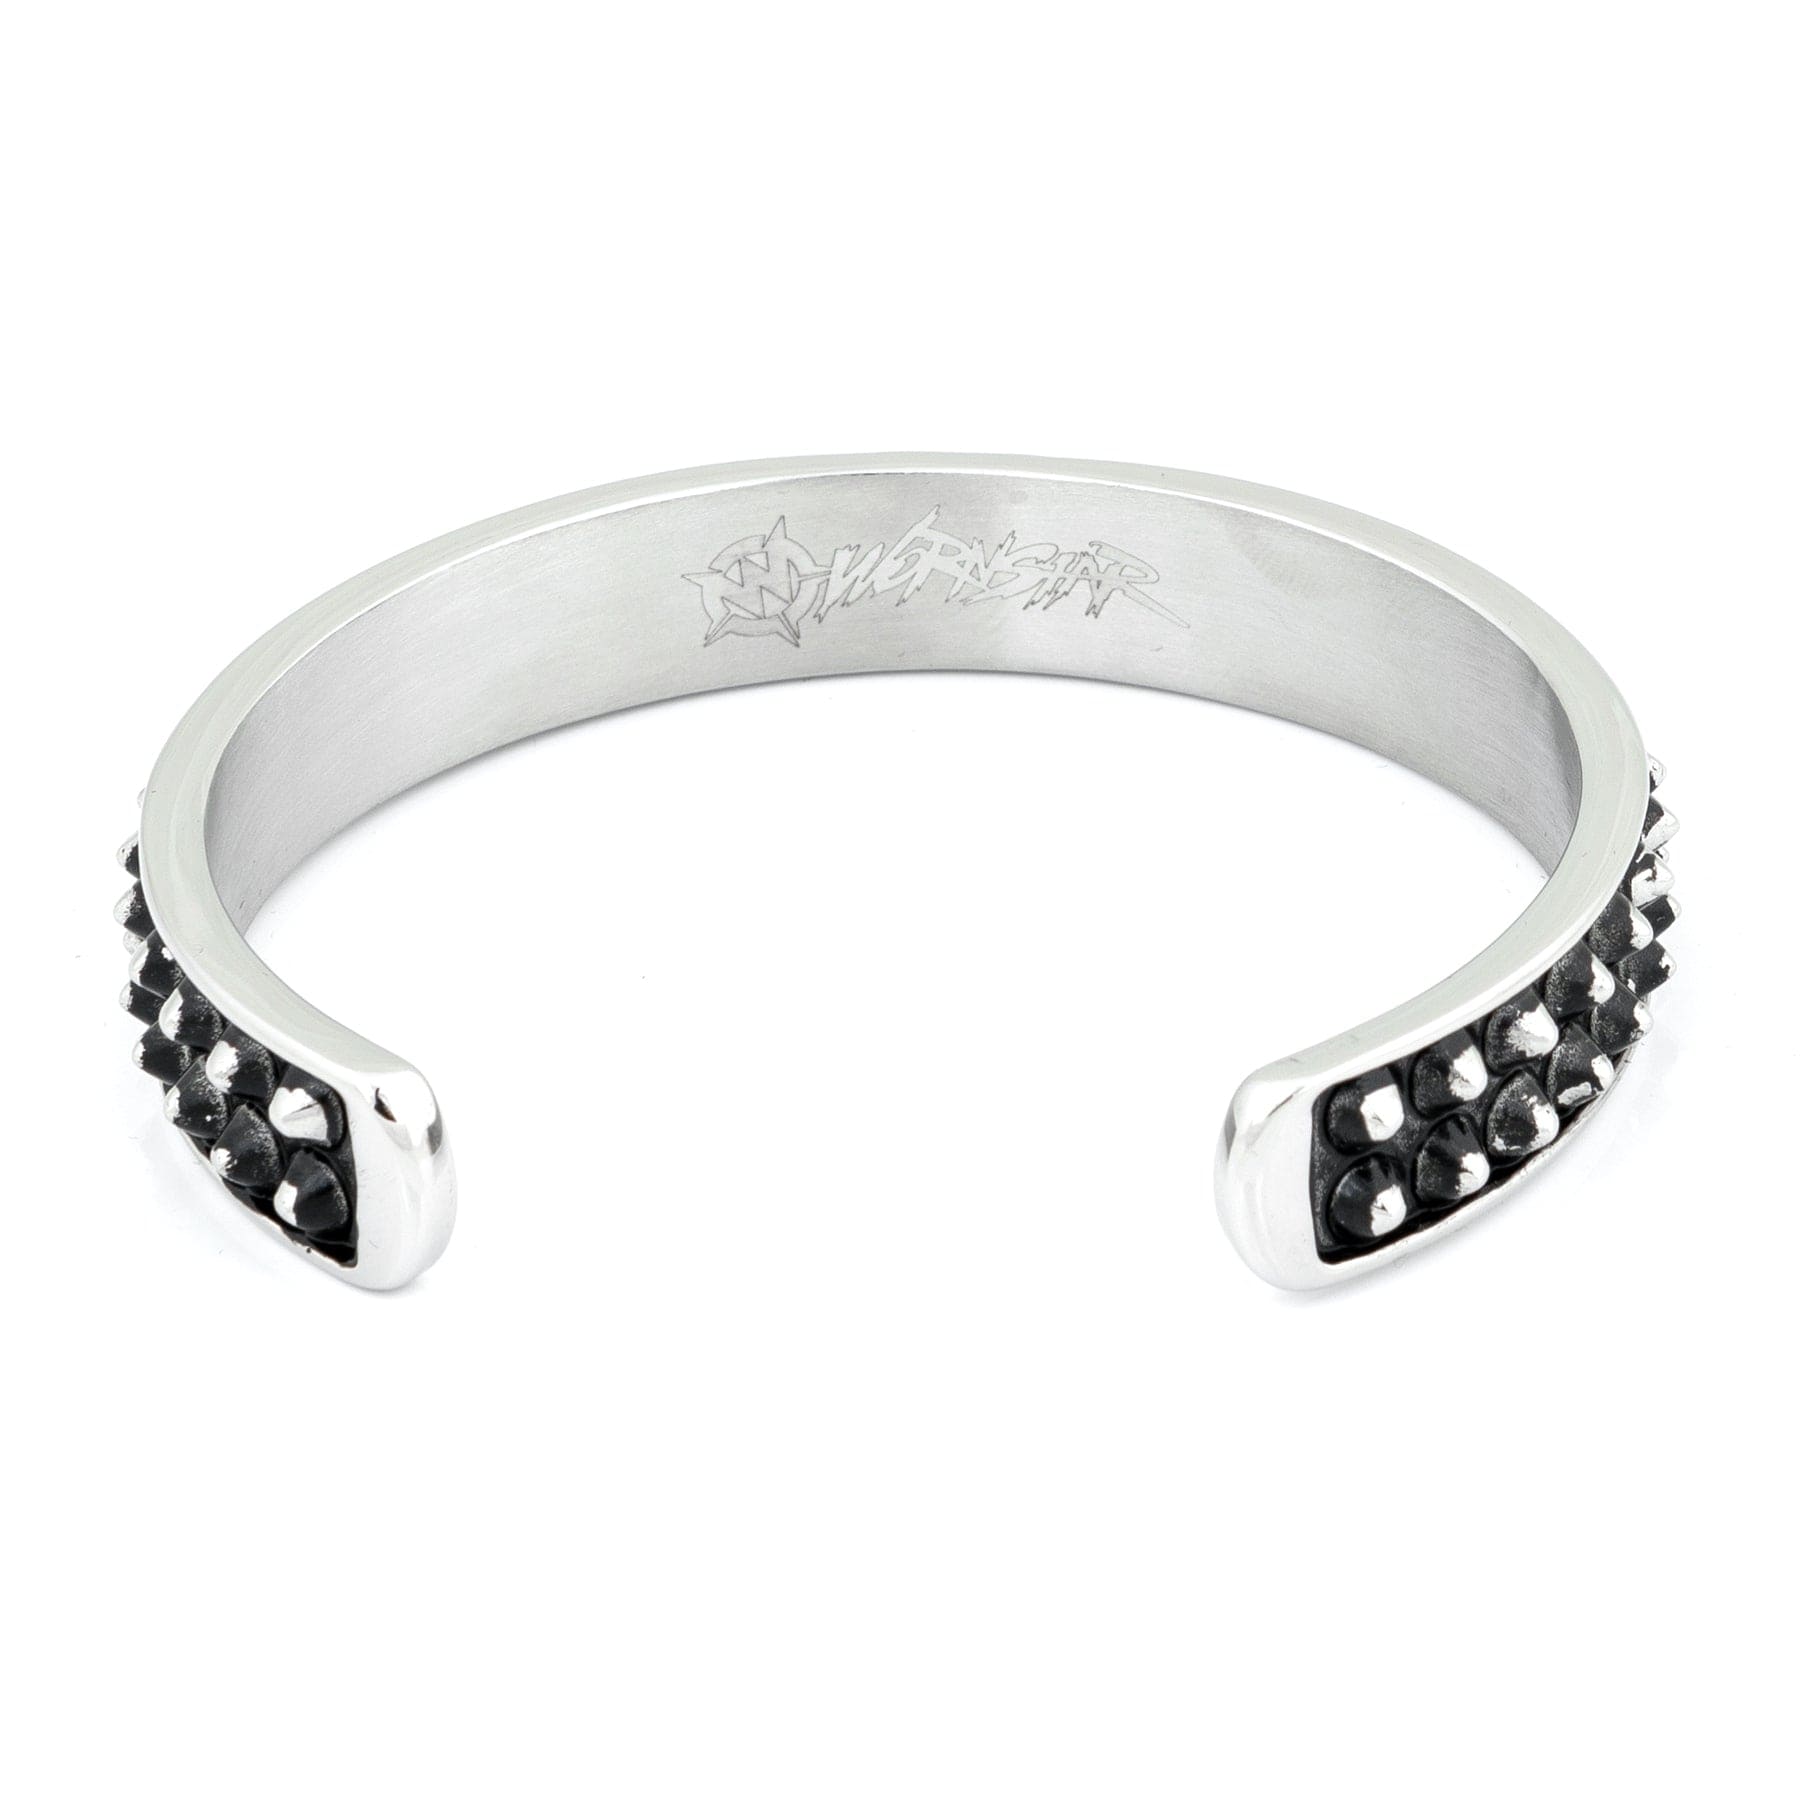 Wornstar Clothing Bracelet. Metalhead Cuff Bracelet